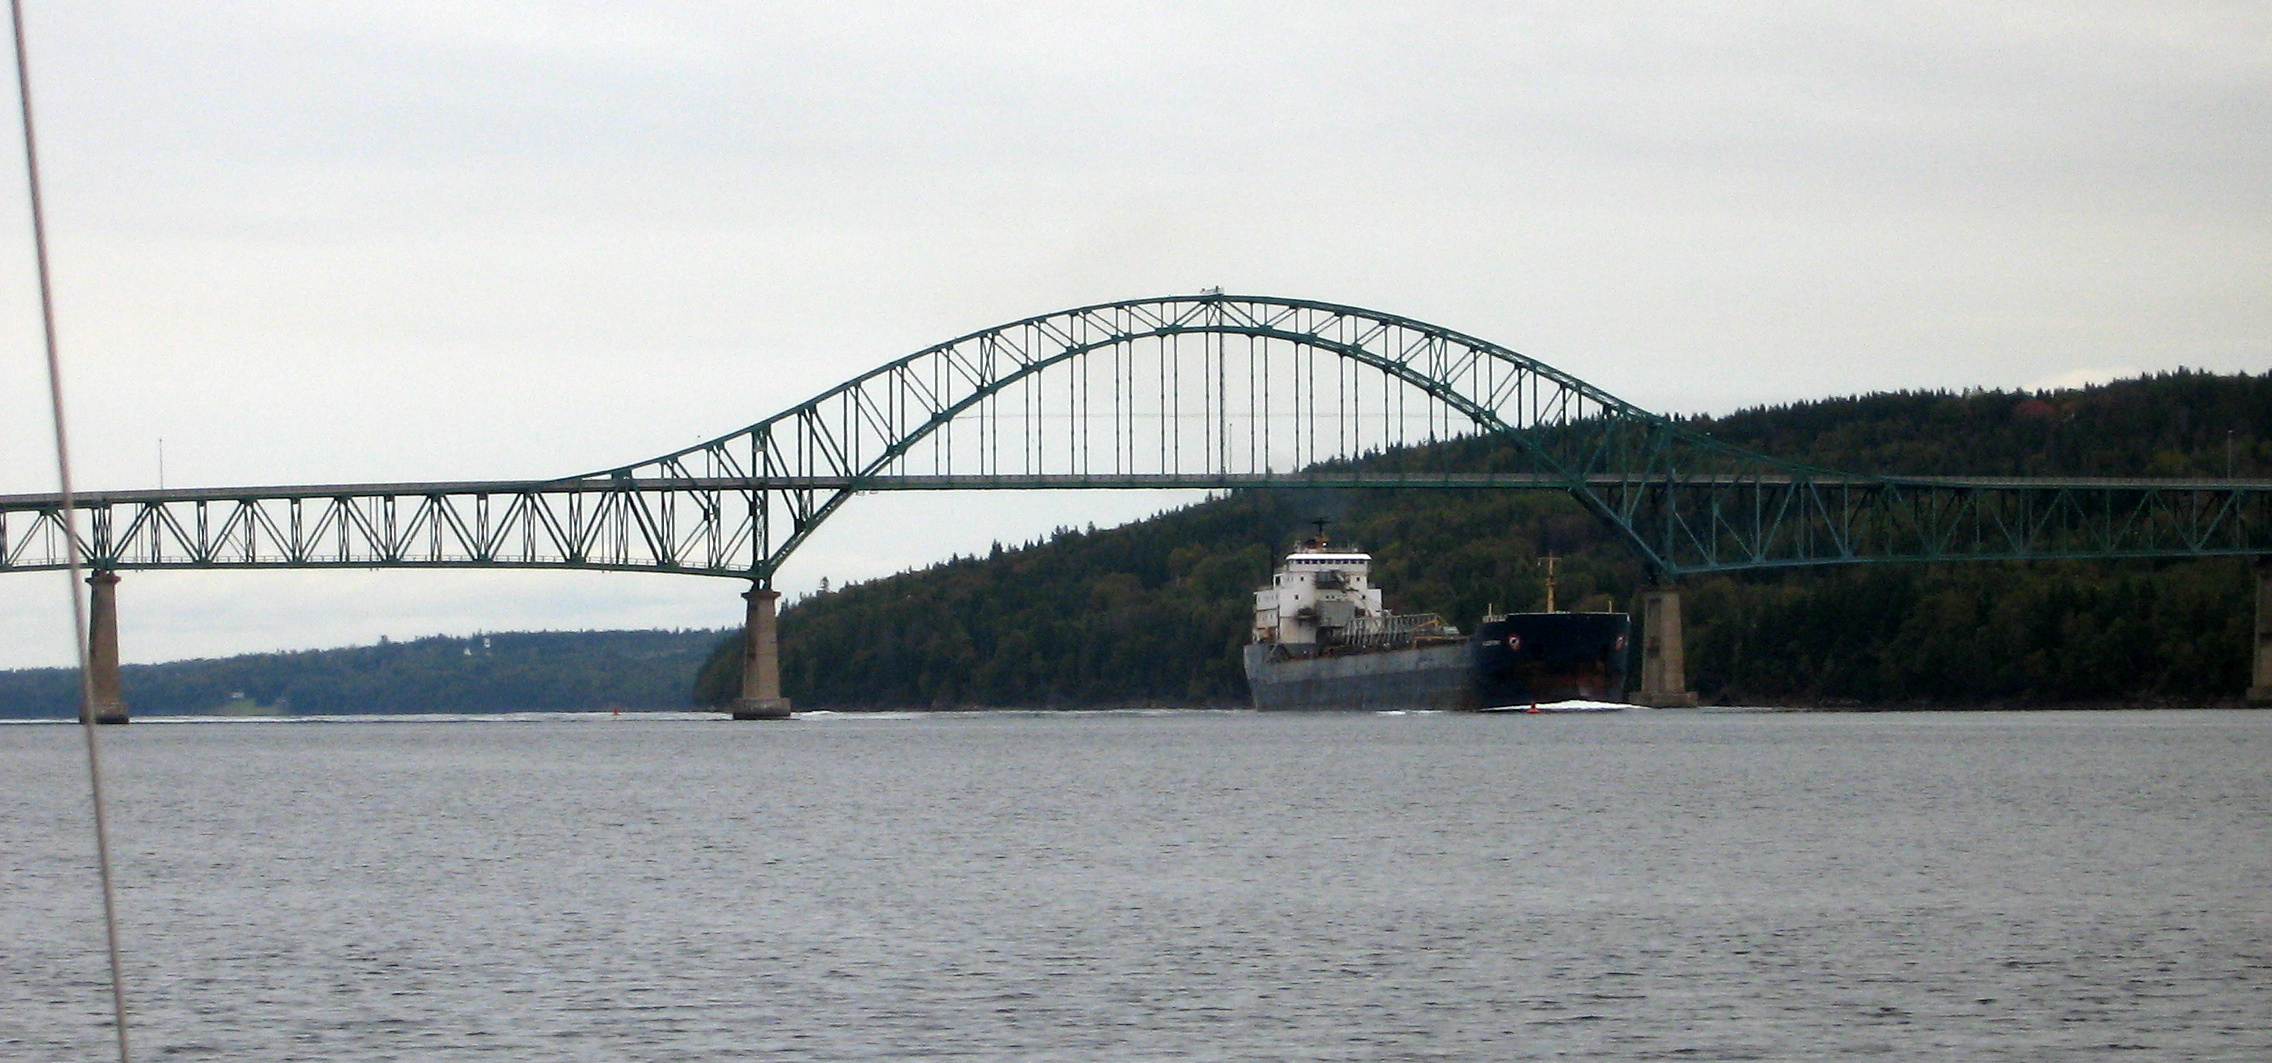 File:Great Bras d'Or (Seal Island) Bridge.jpg - Wikipedia